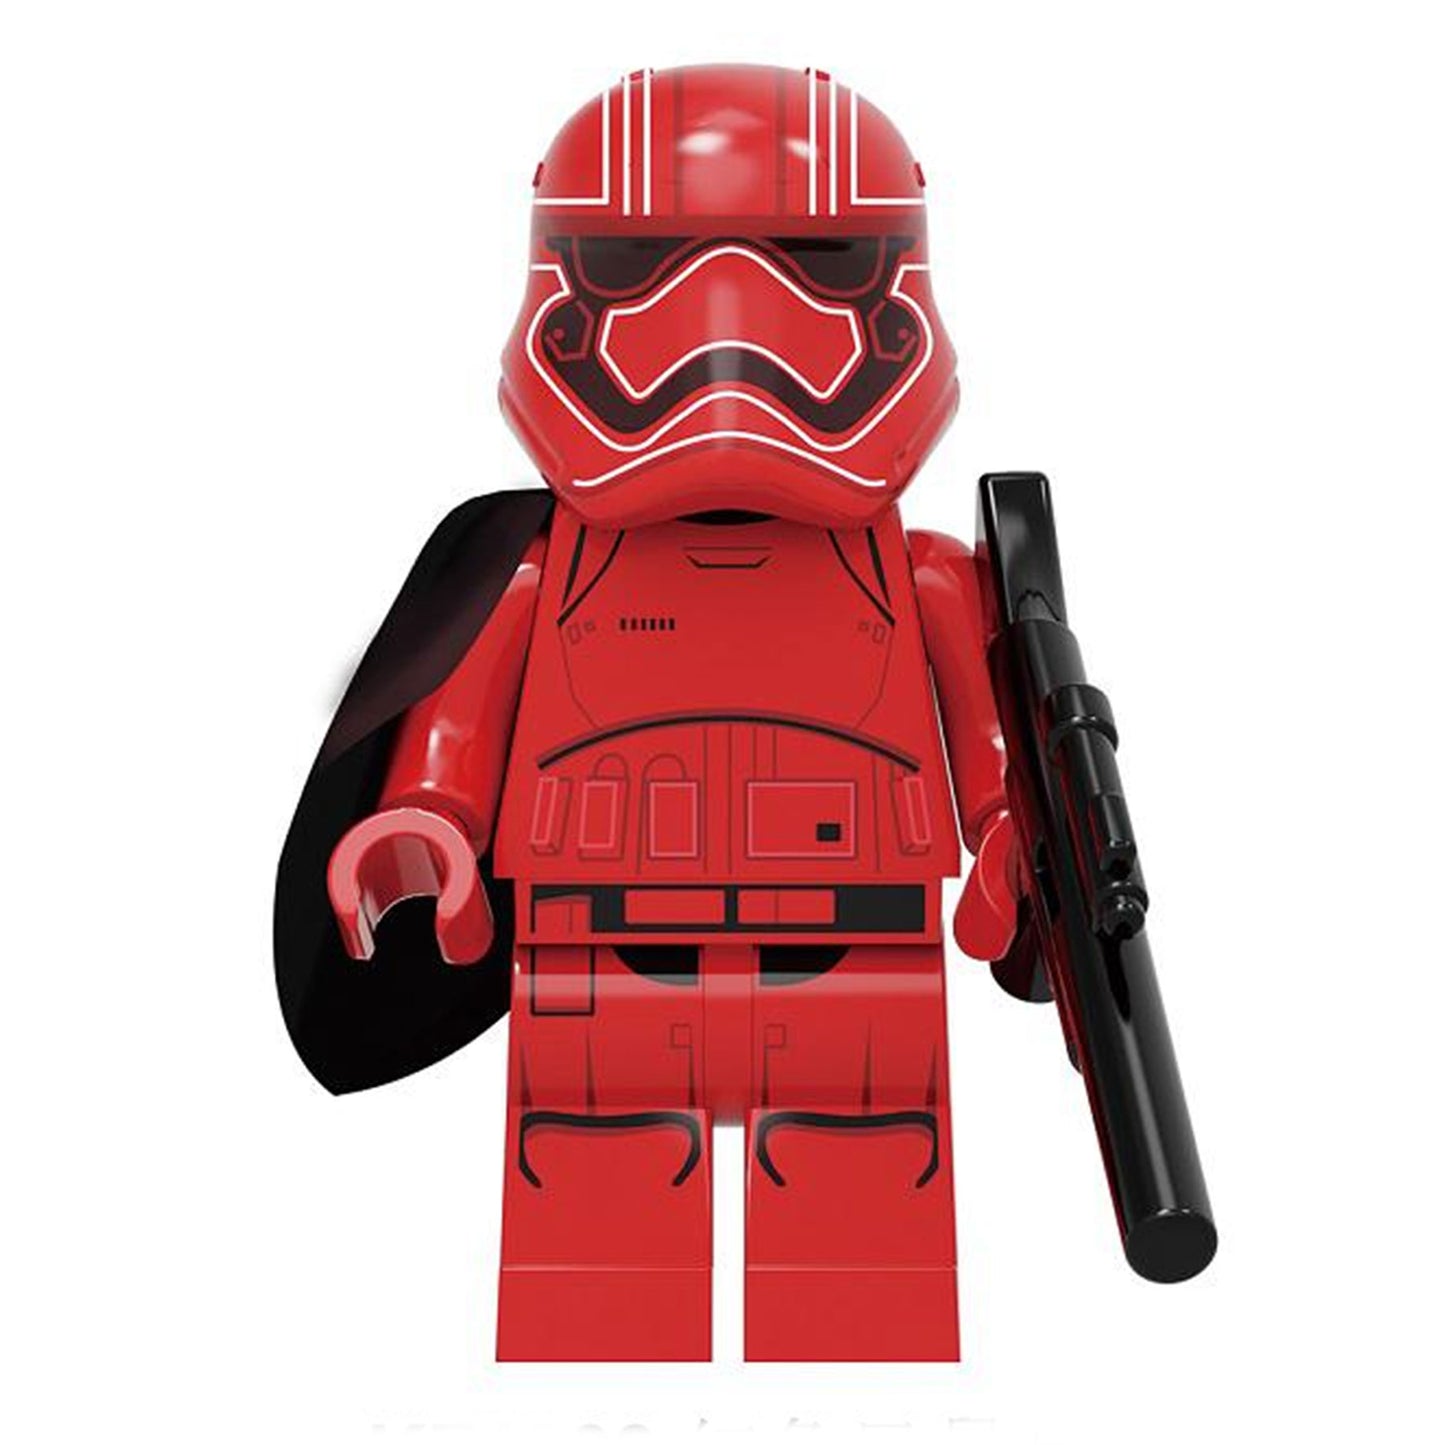 Sith Commander Cardinal Lego Star Wars Minifigures Delsbricks.com   